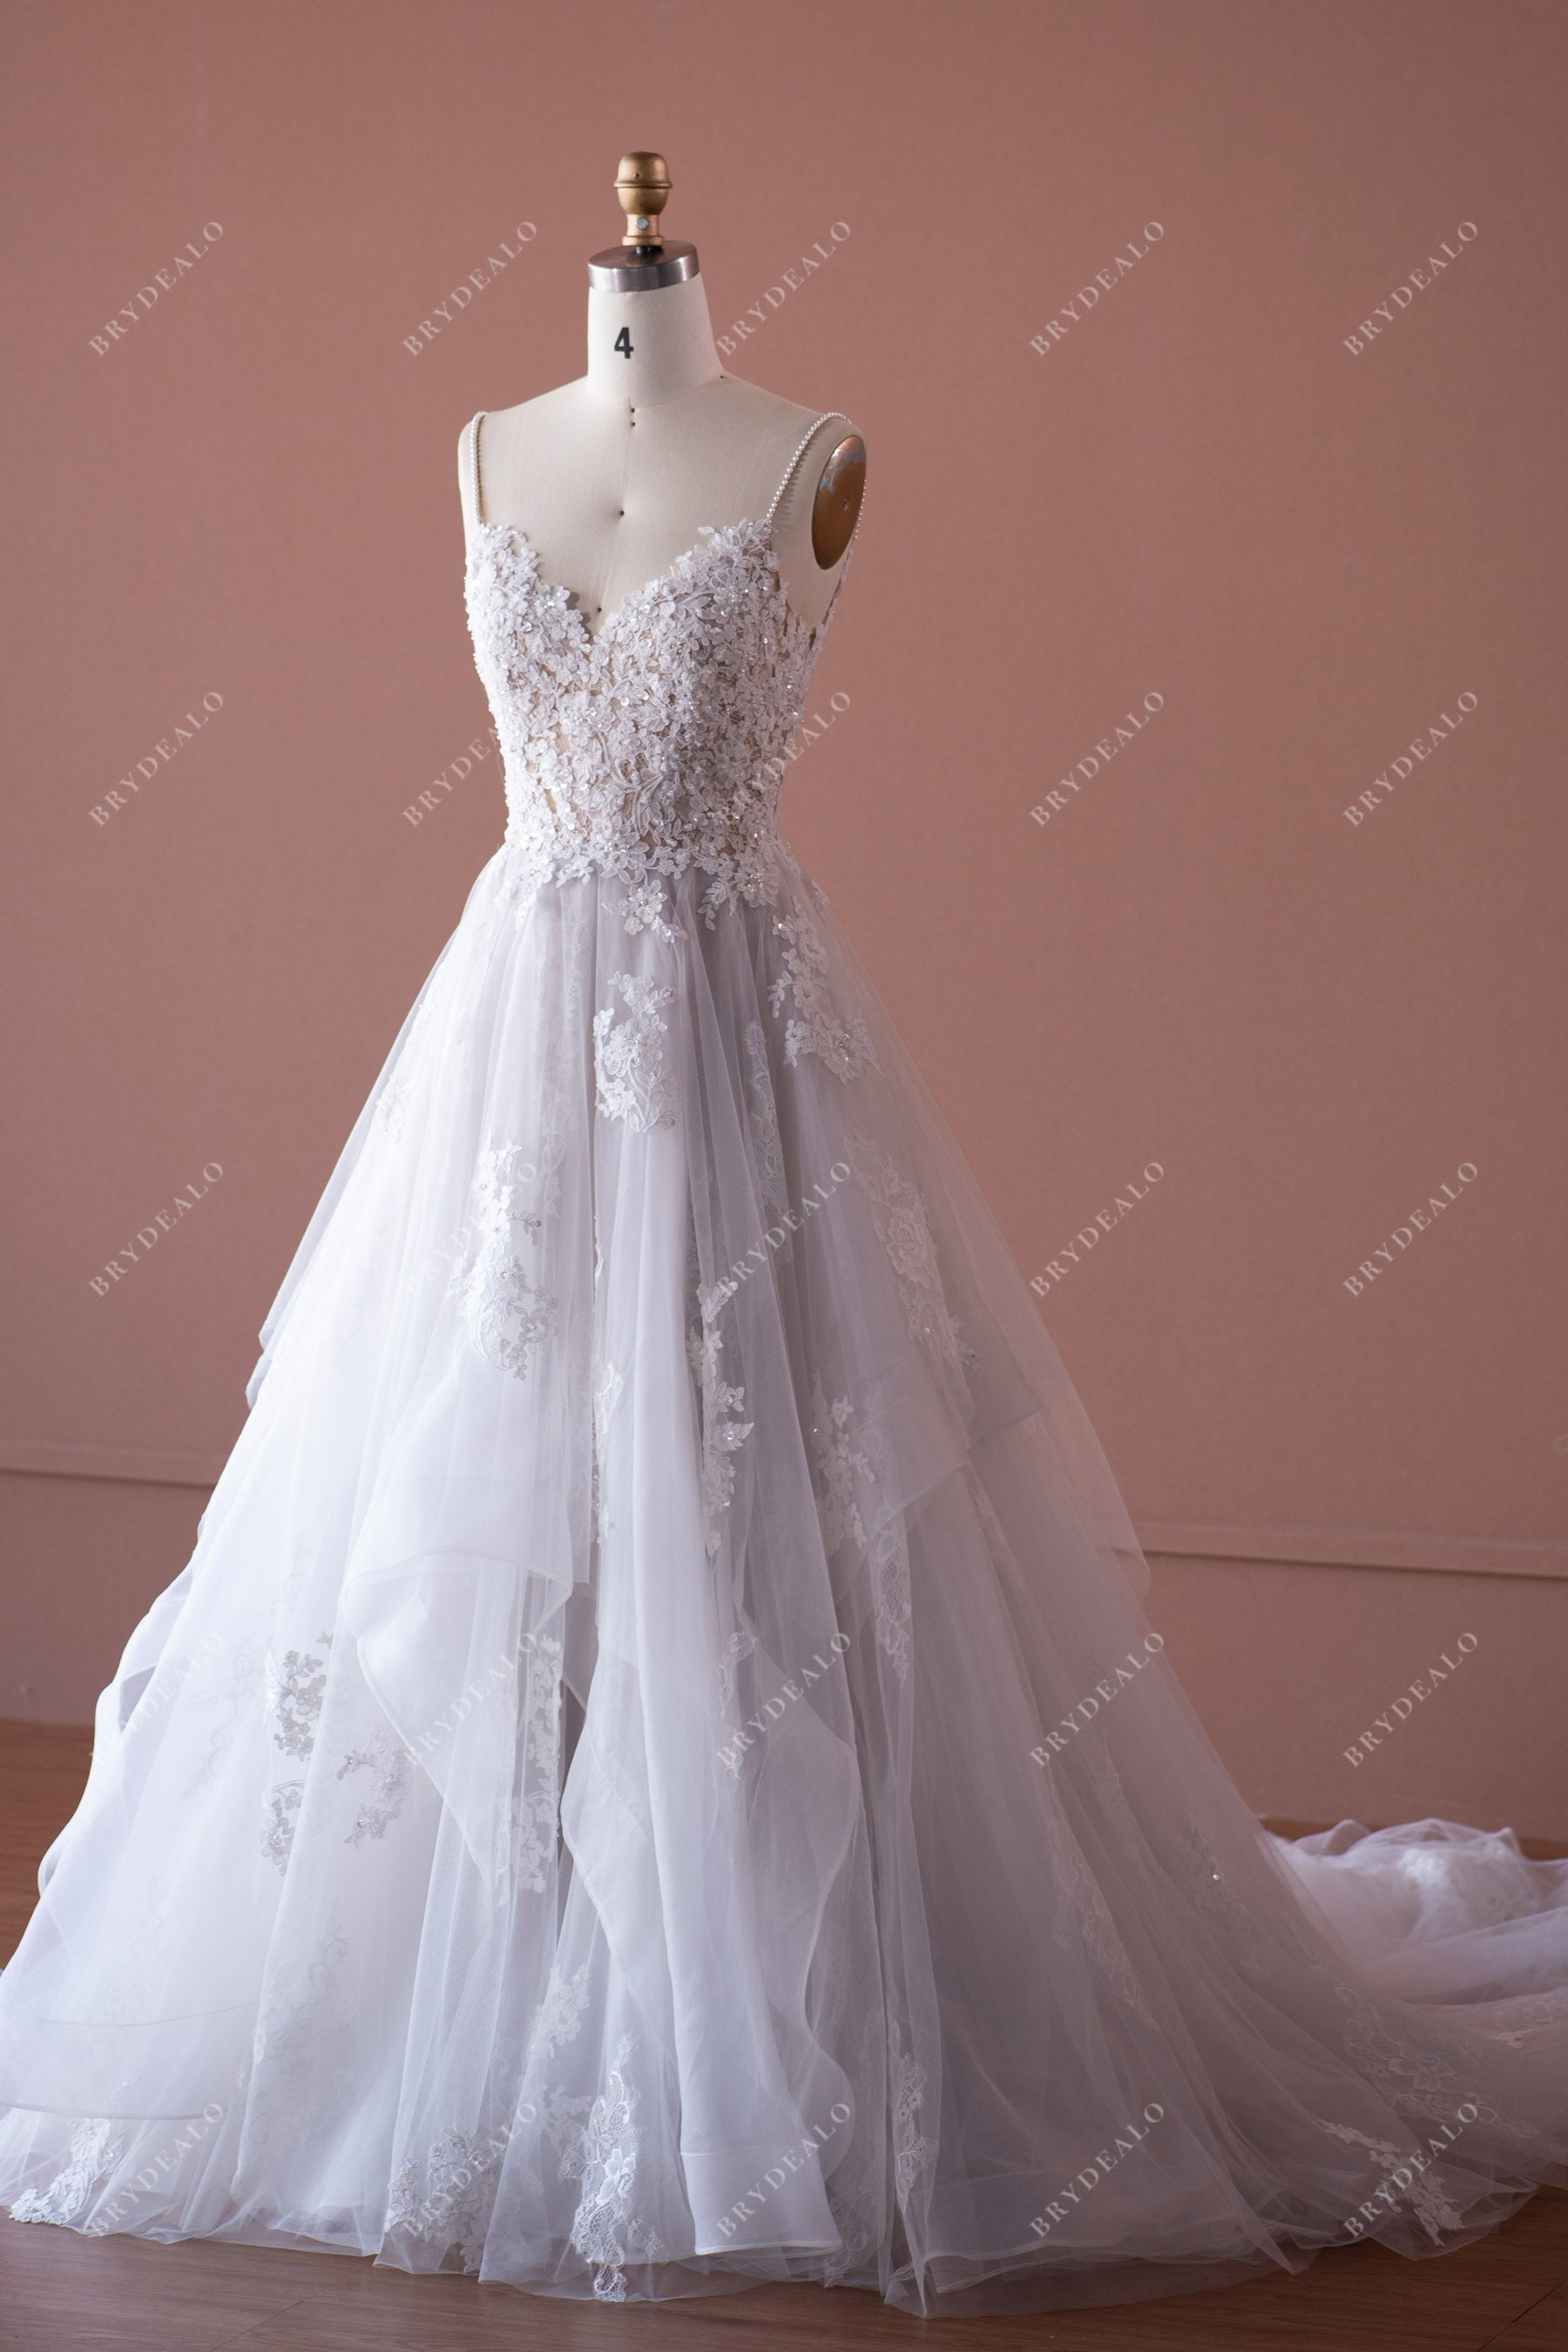 Spaghetti Strap Lace Ballgown Wedding Dress